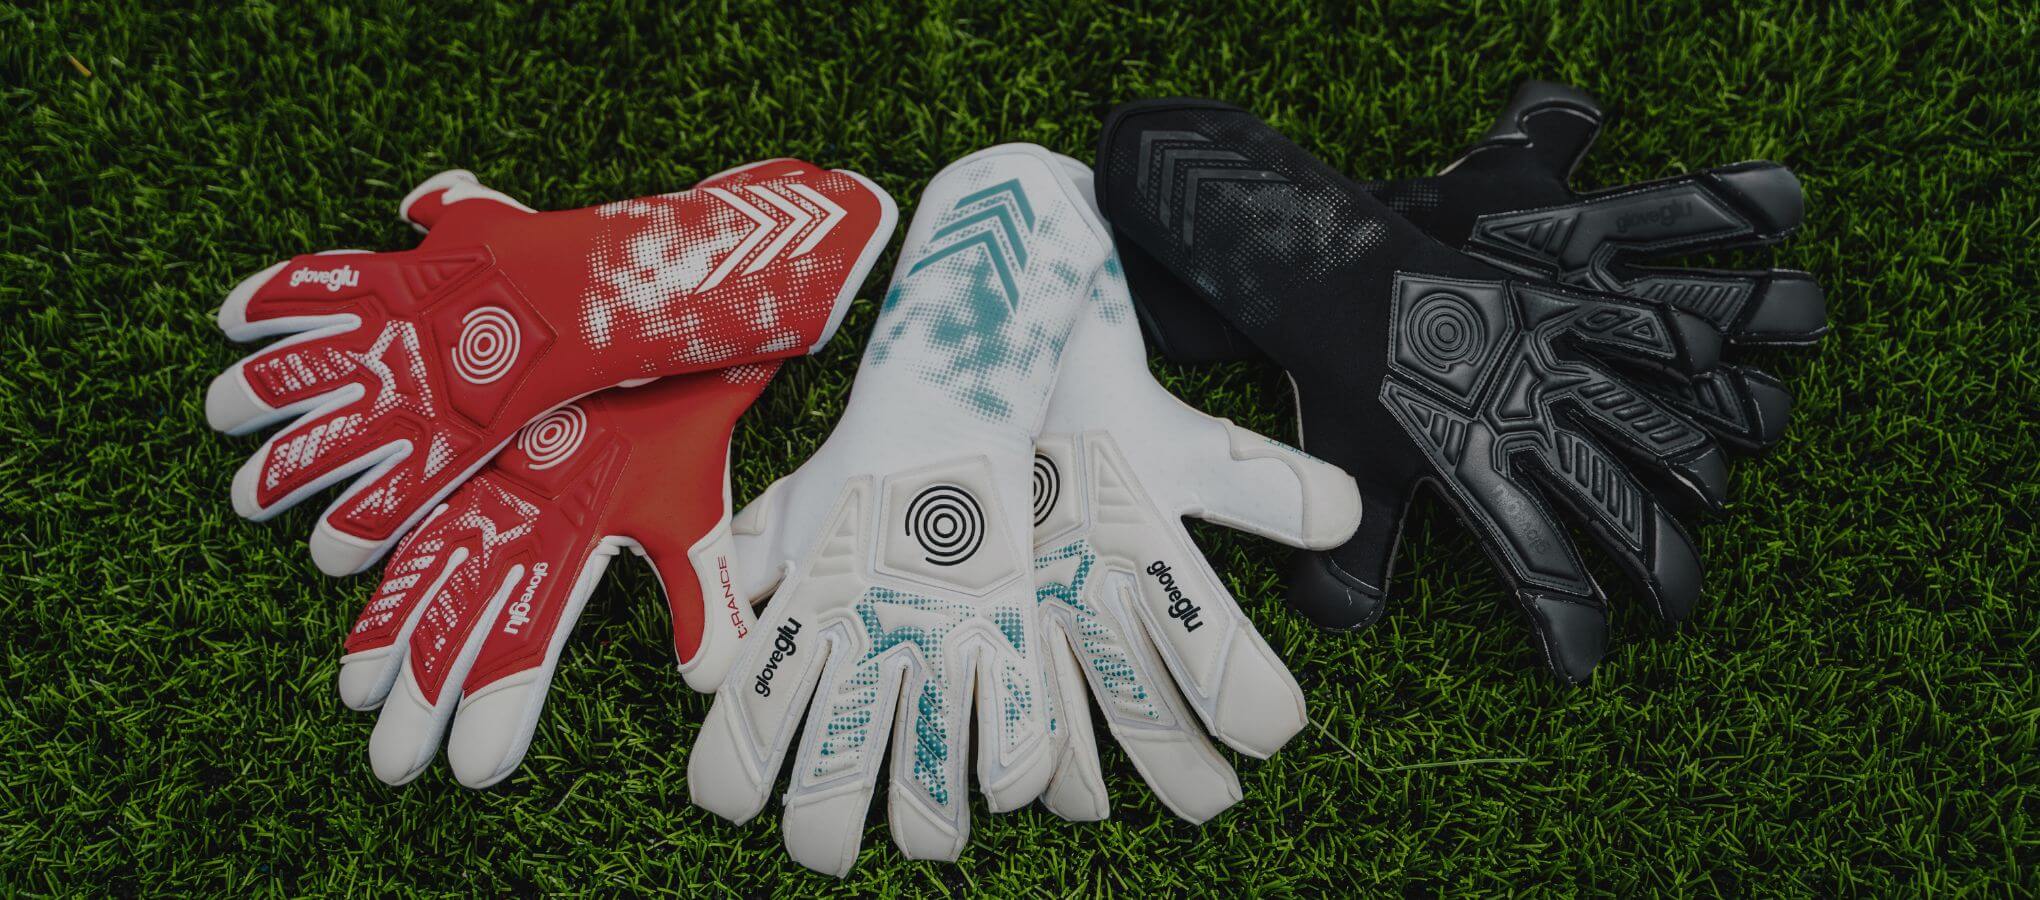 Poniendo a prueba el Glove Glu #porteros #porterostv #goalkeepers #por